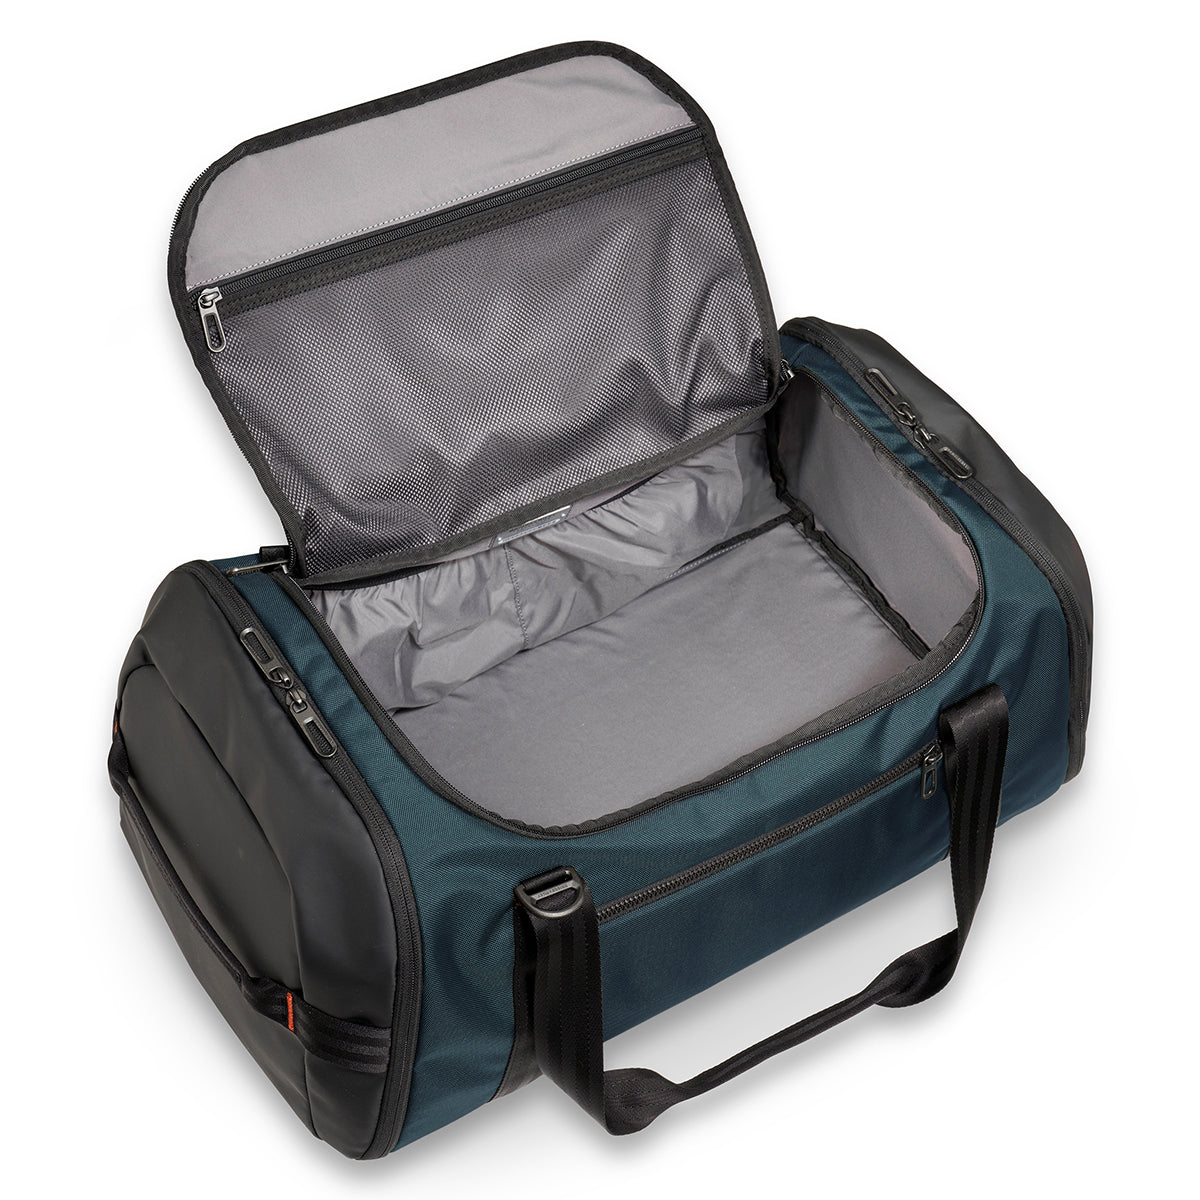 Briggs & Riley ZDX Large Travel Duffle Bag